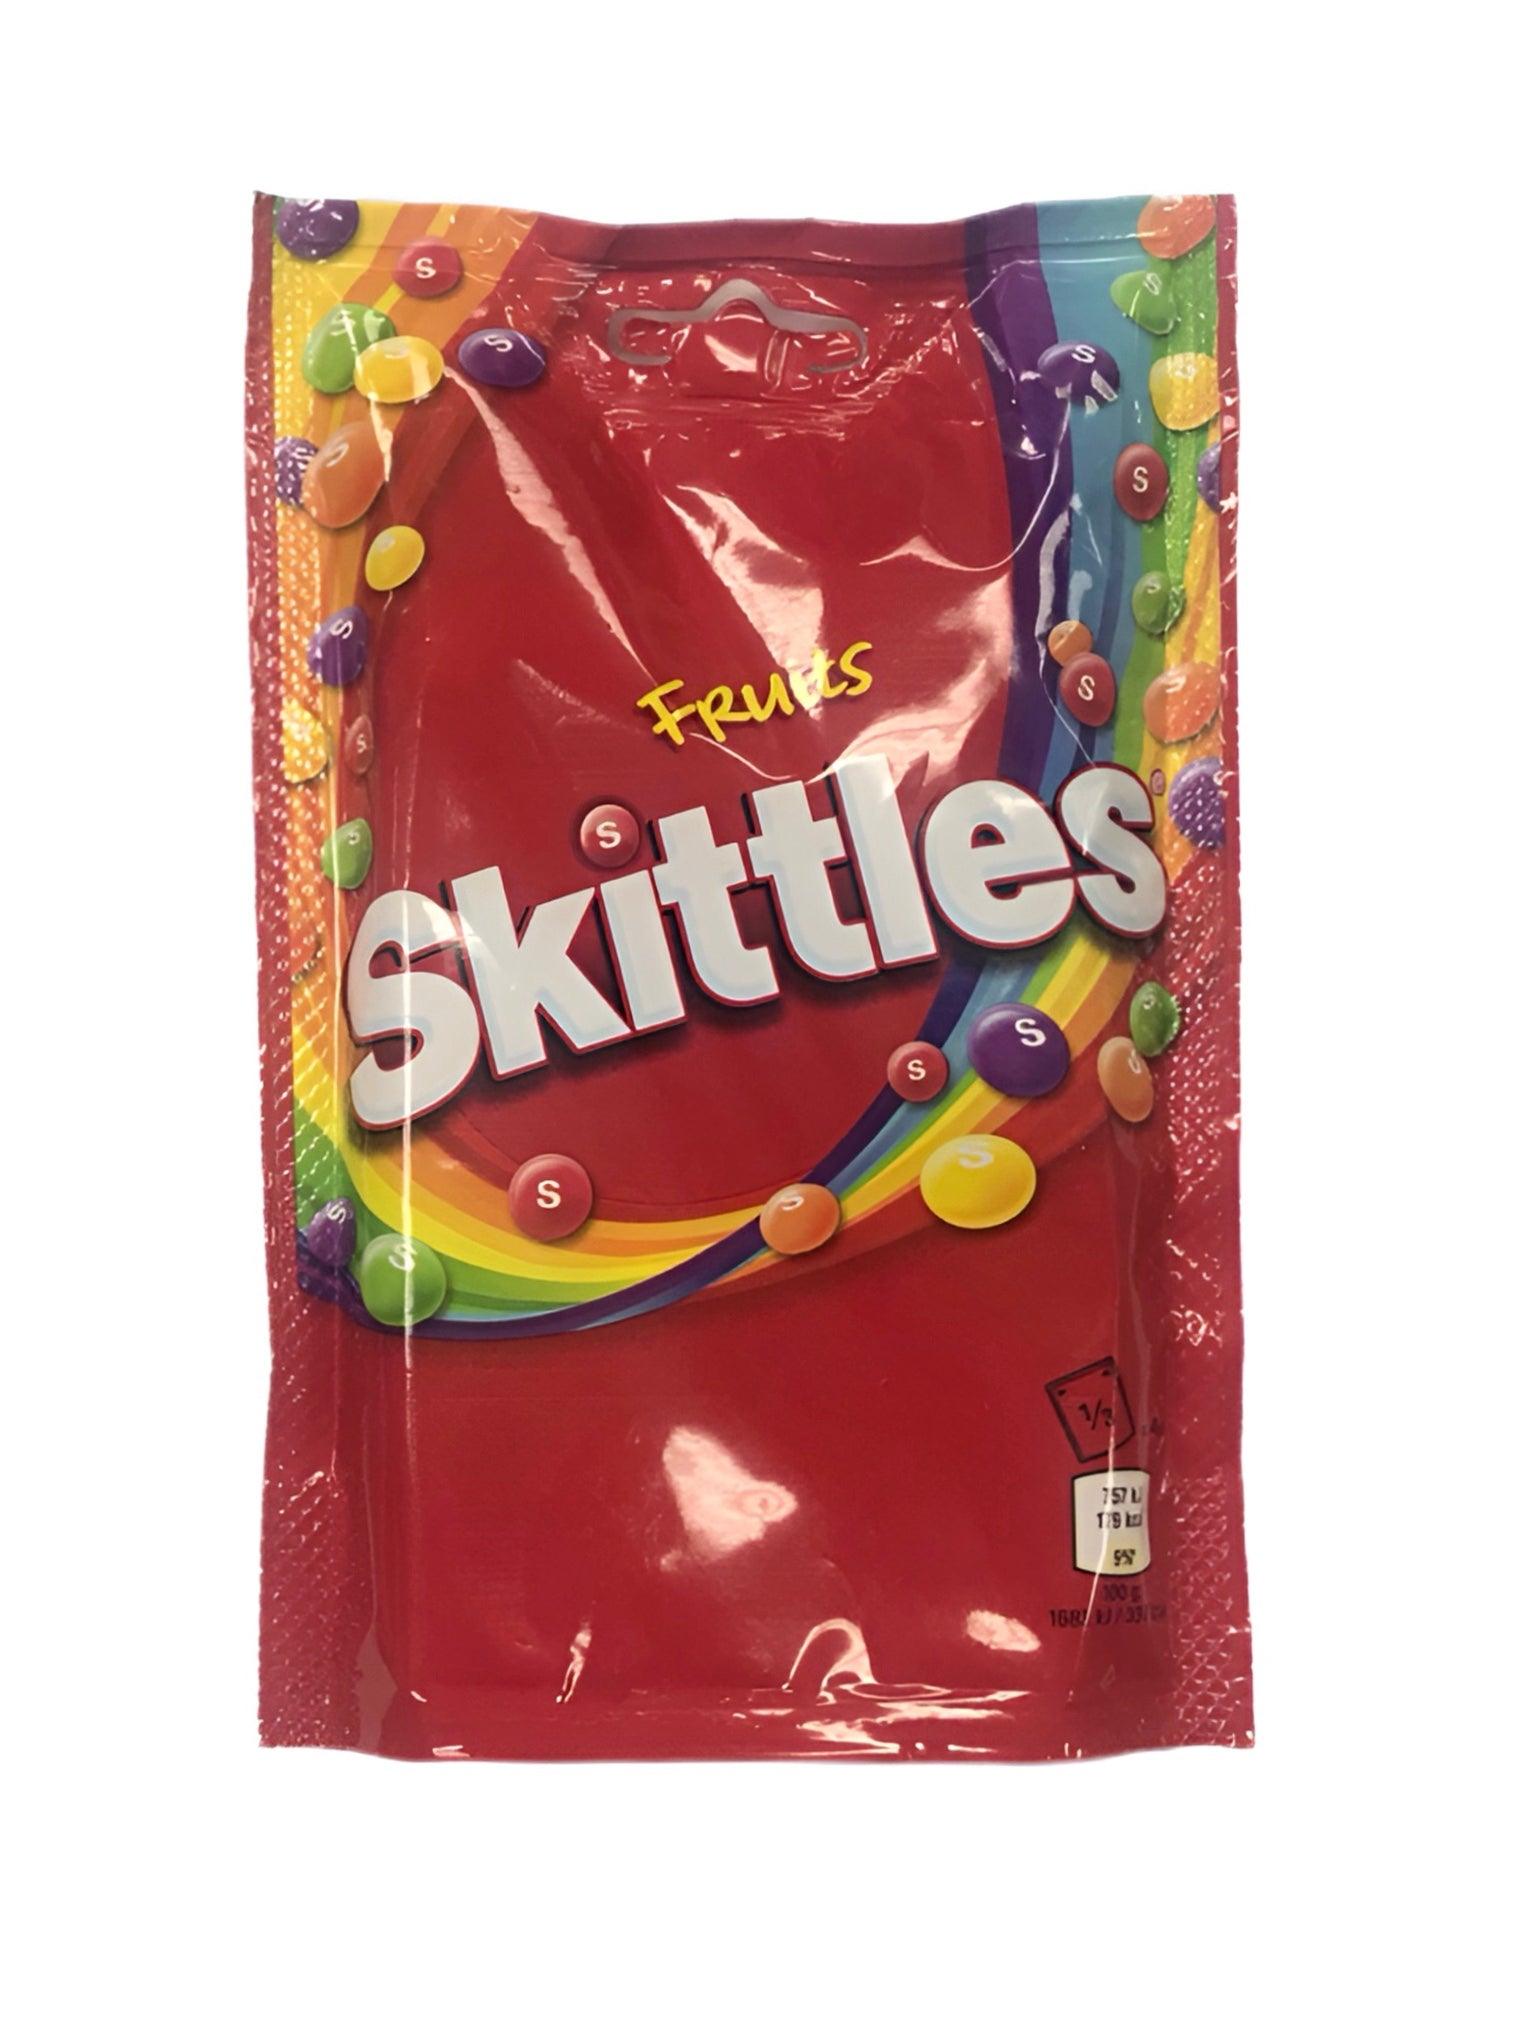 Skittles Original Candy Bag - 191G - Extreme Snacks